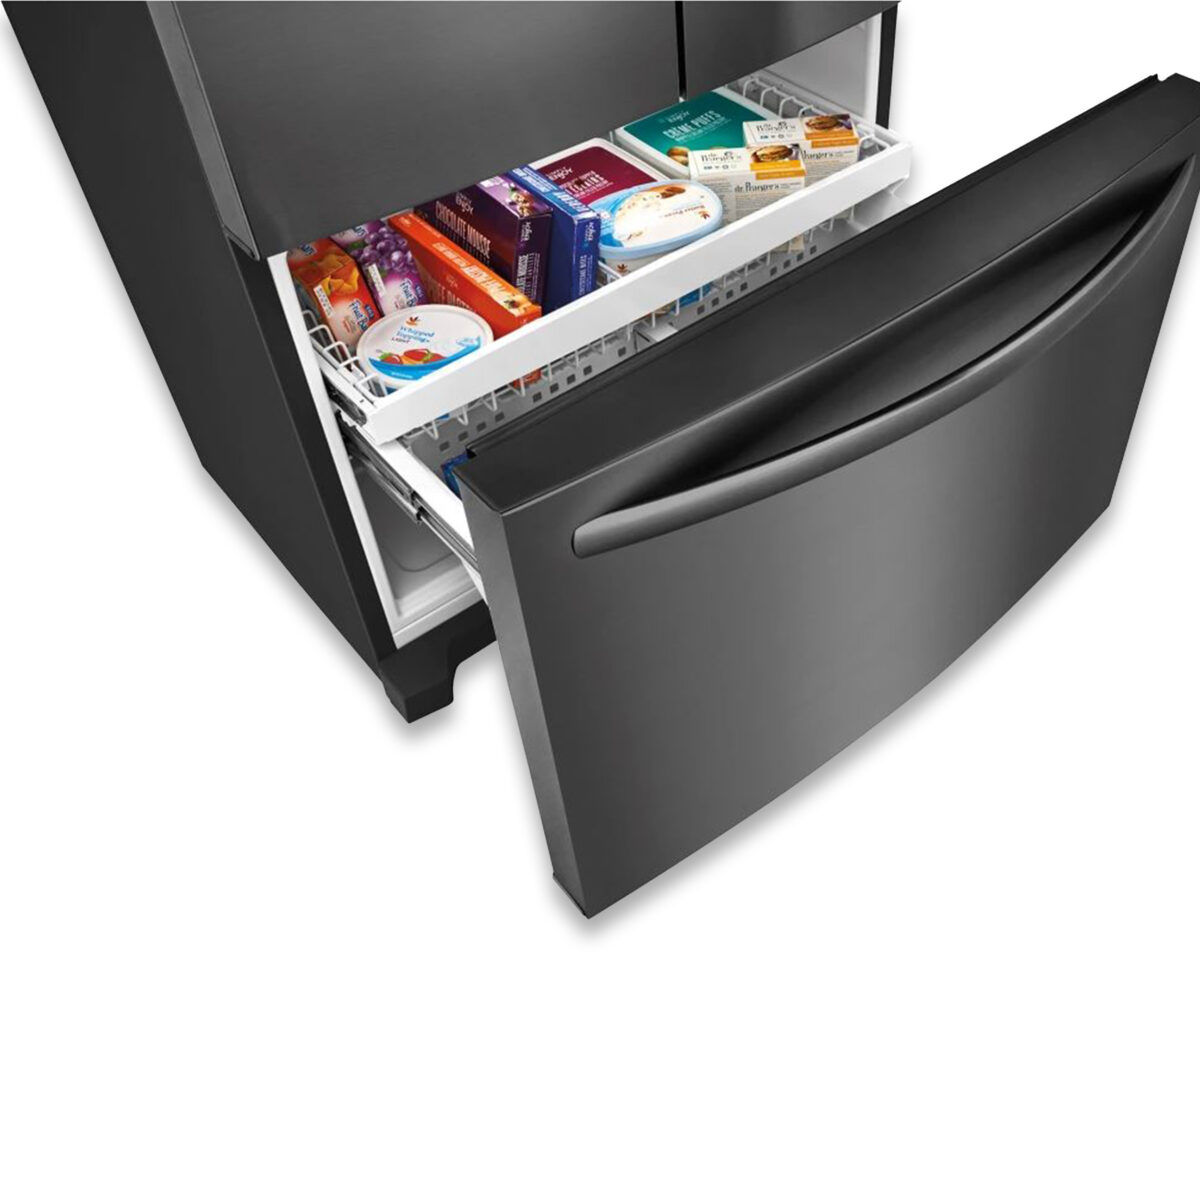 frigidaire-refrigerator-ffhb2750td-black-stainless-steel-protrade